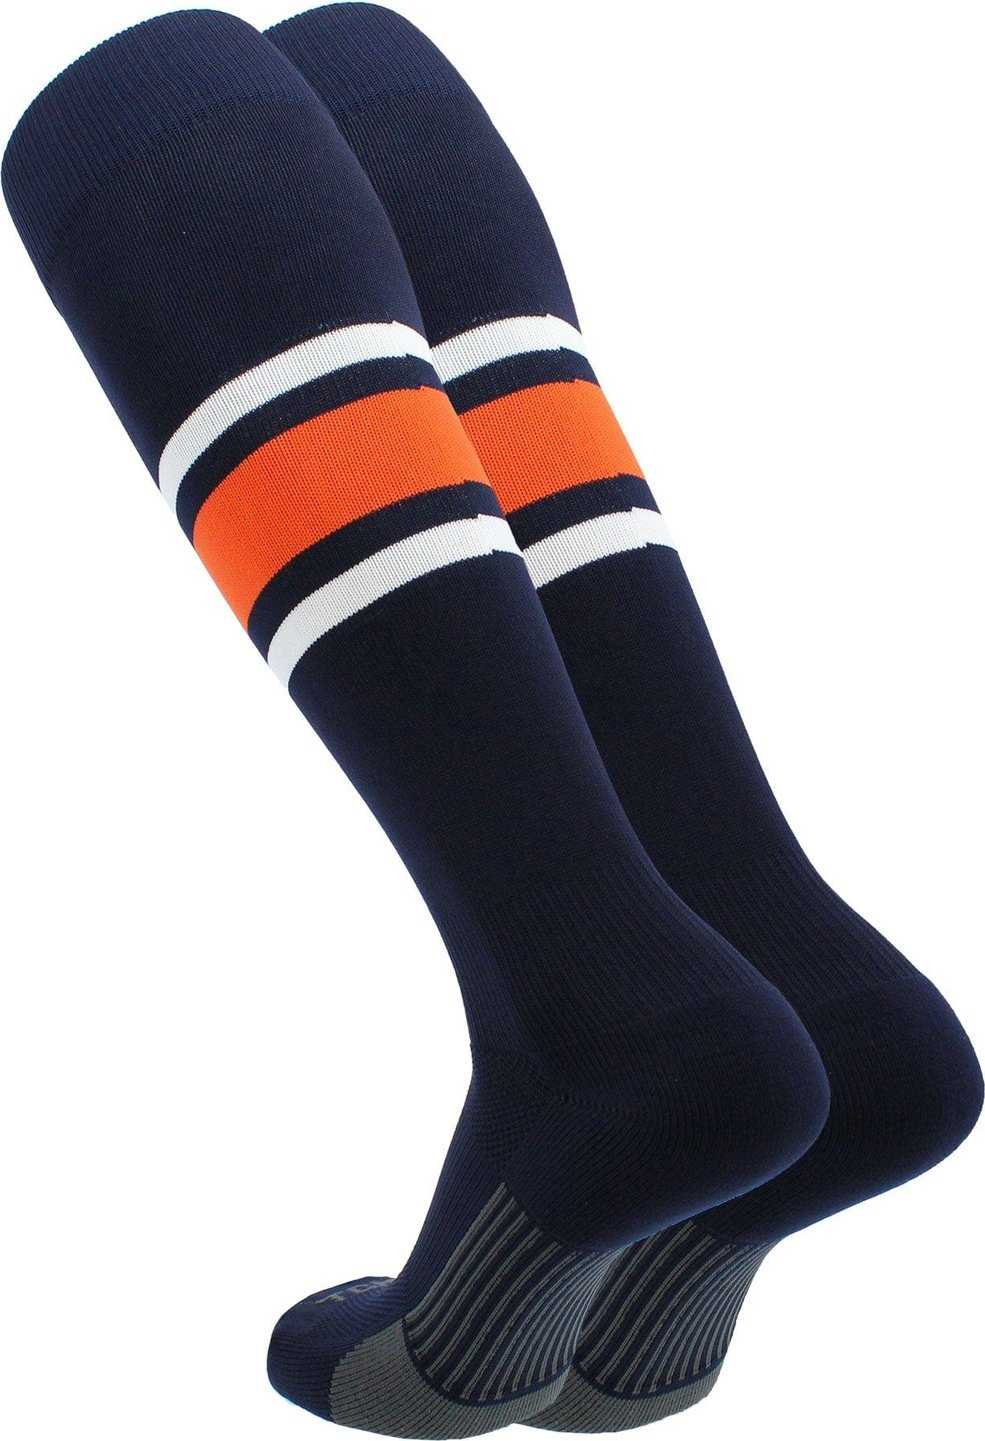 TCK Dugout Knee High Socks - Navy White Orange - HIT a Double - 1